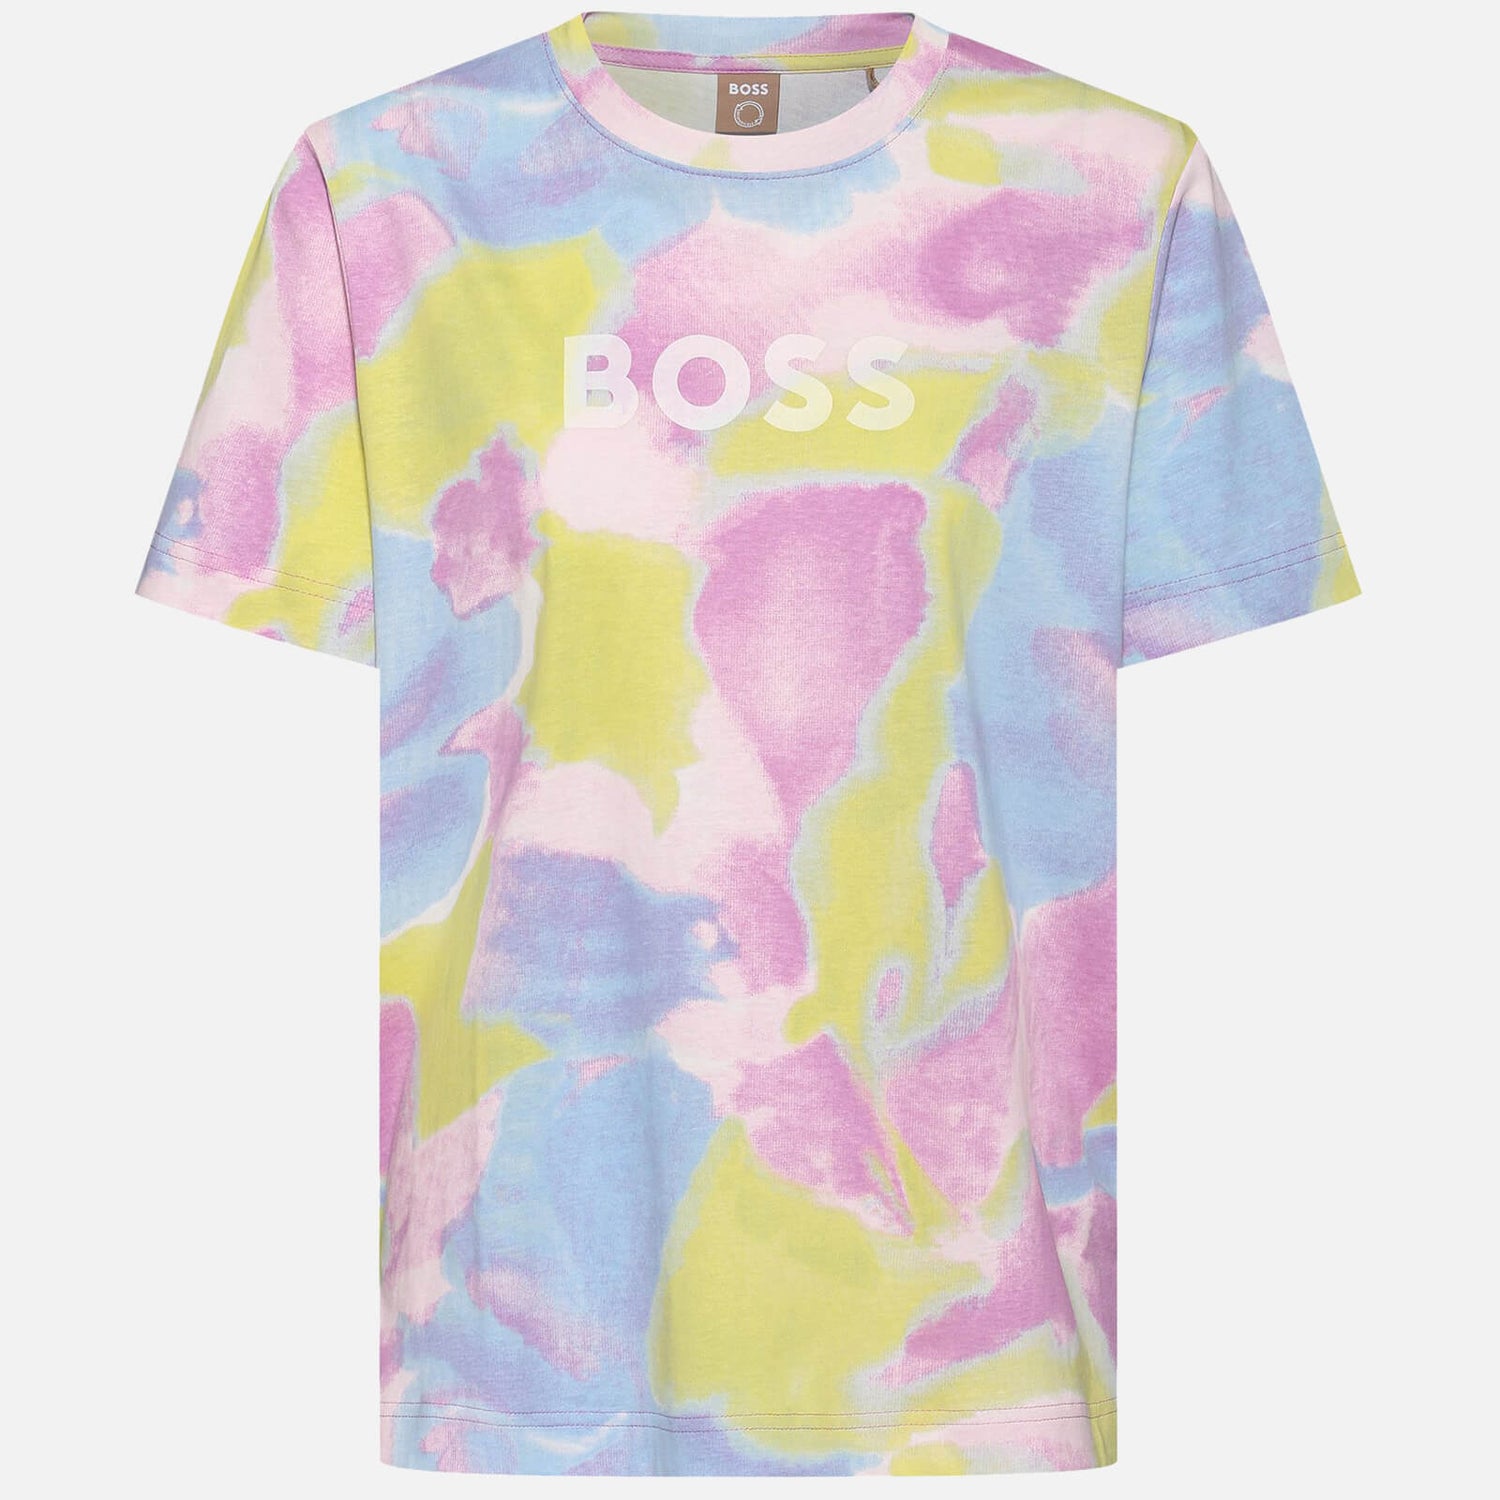 BOSS Women's Ecosa T-Shirt - Open Miscellaneous - XS